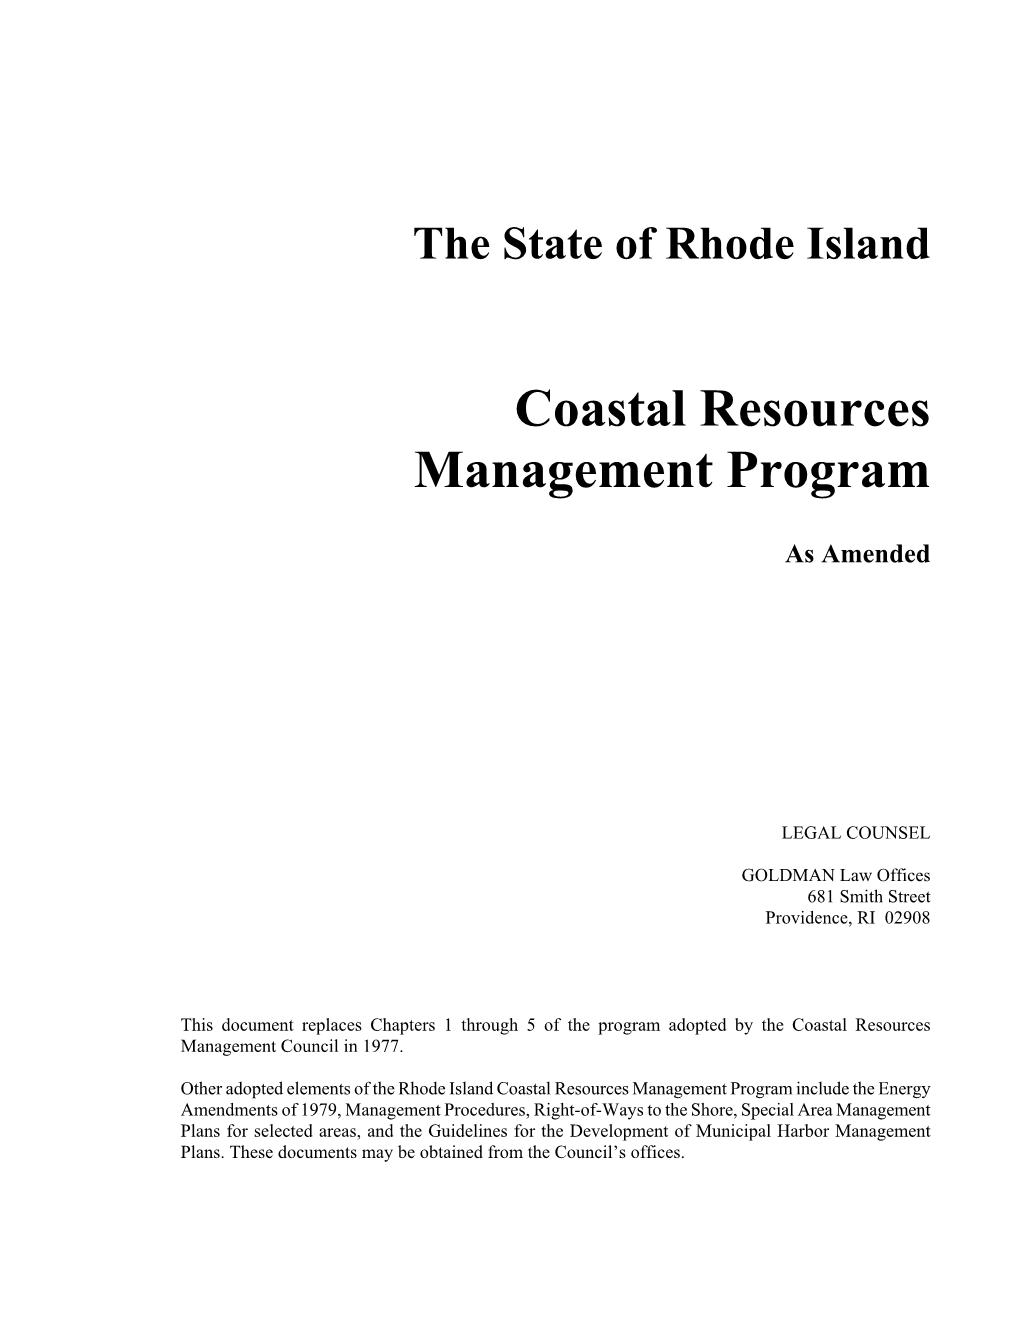 RI Coastal Resources Management Program